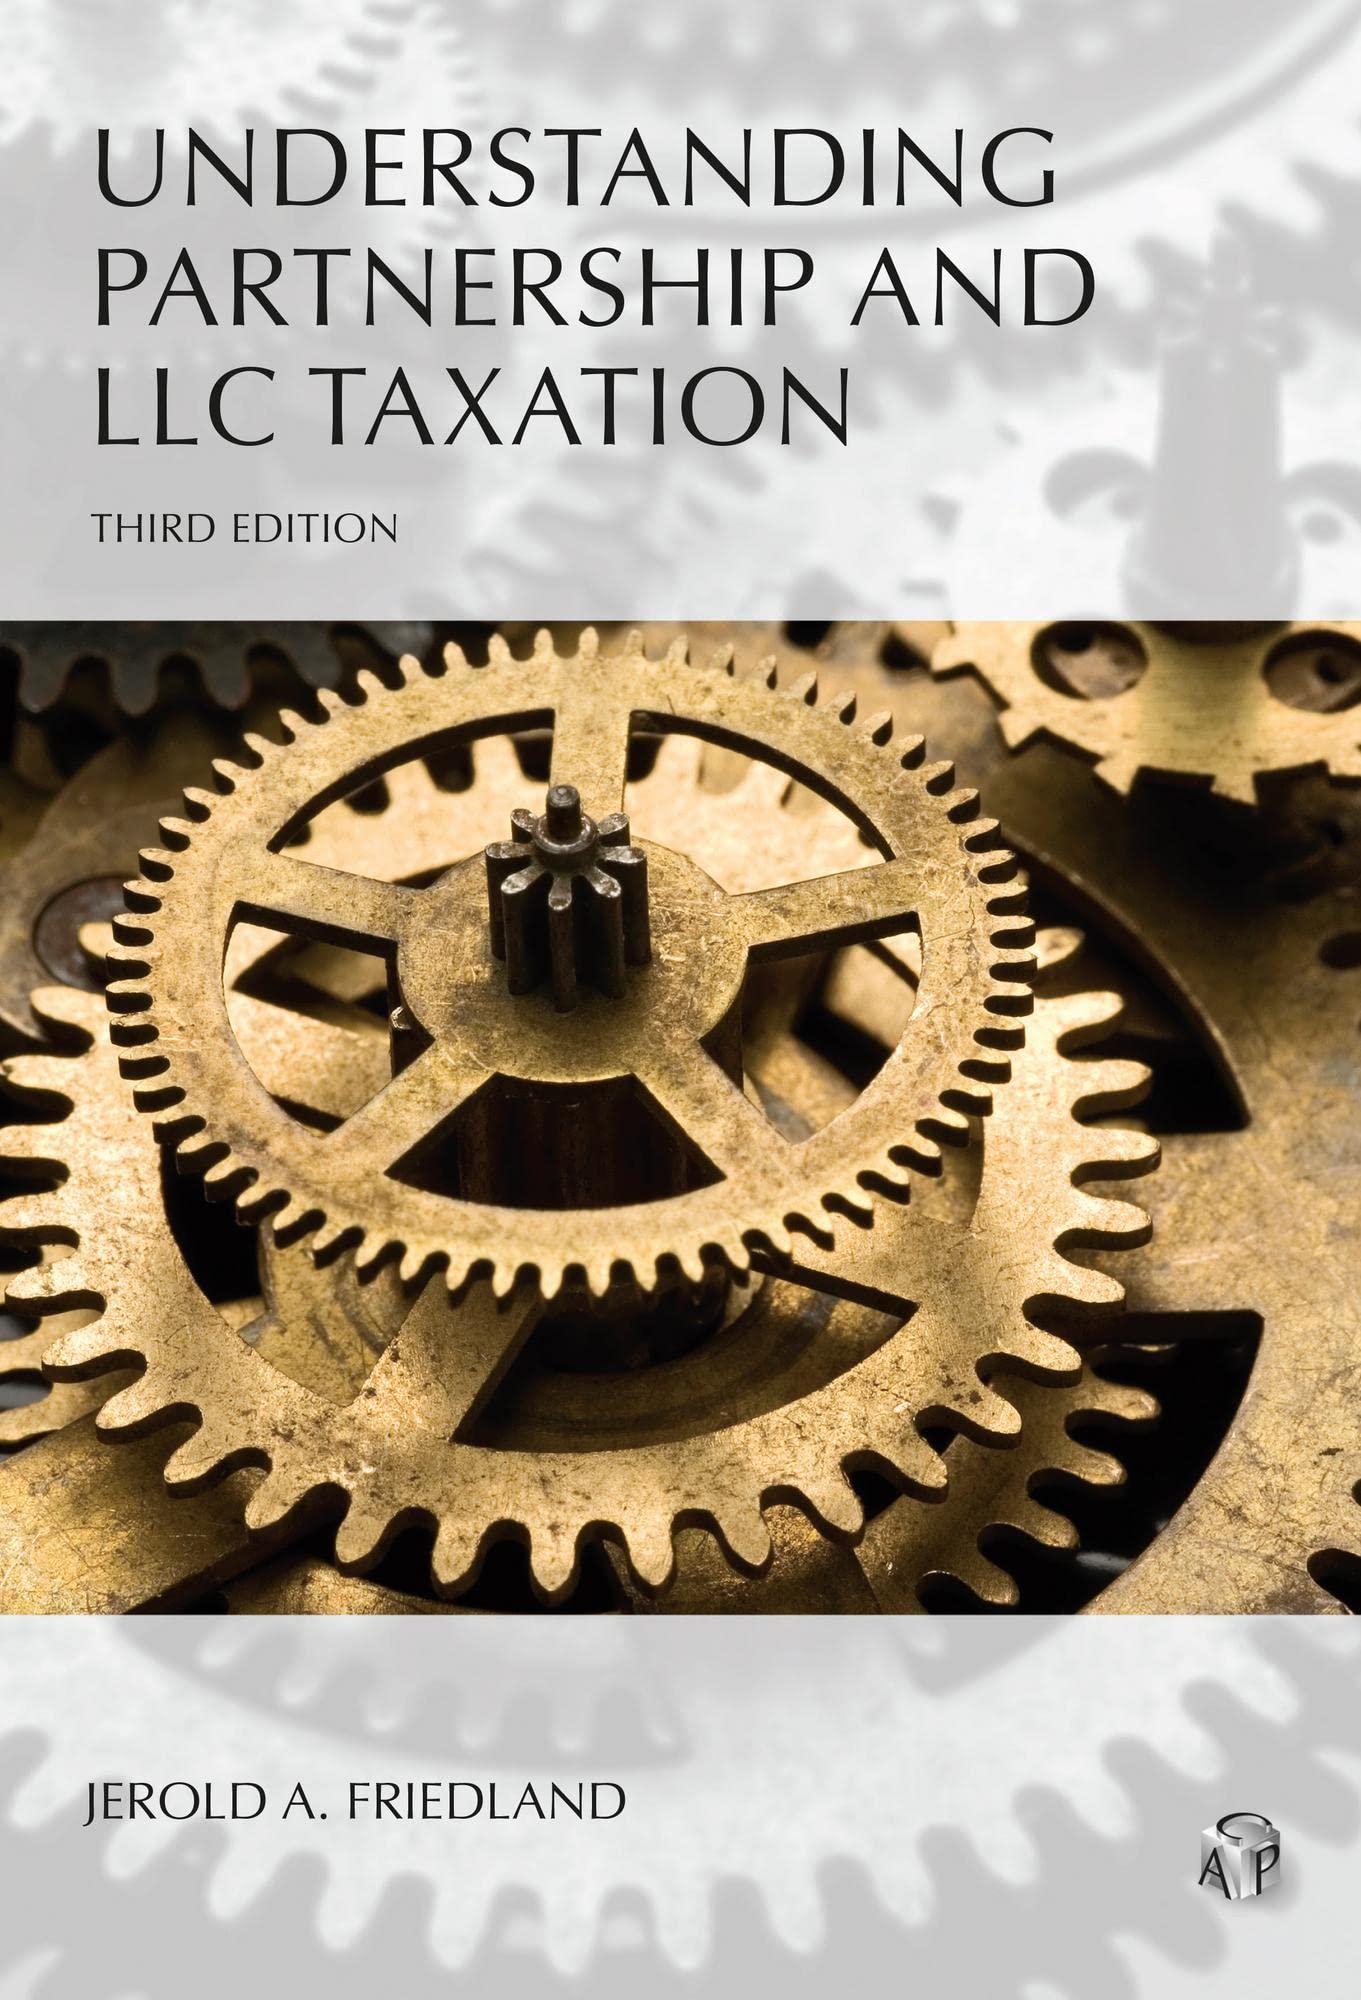 understanding partnership and llc taxation 3rd edition jerold a. friedland 1422490912, 9781422490914